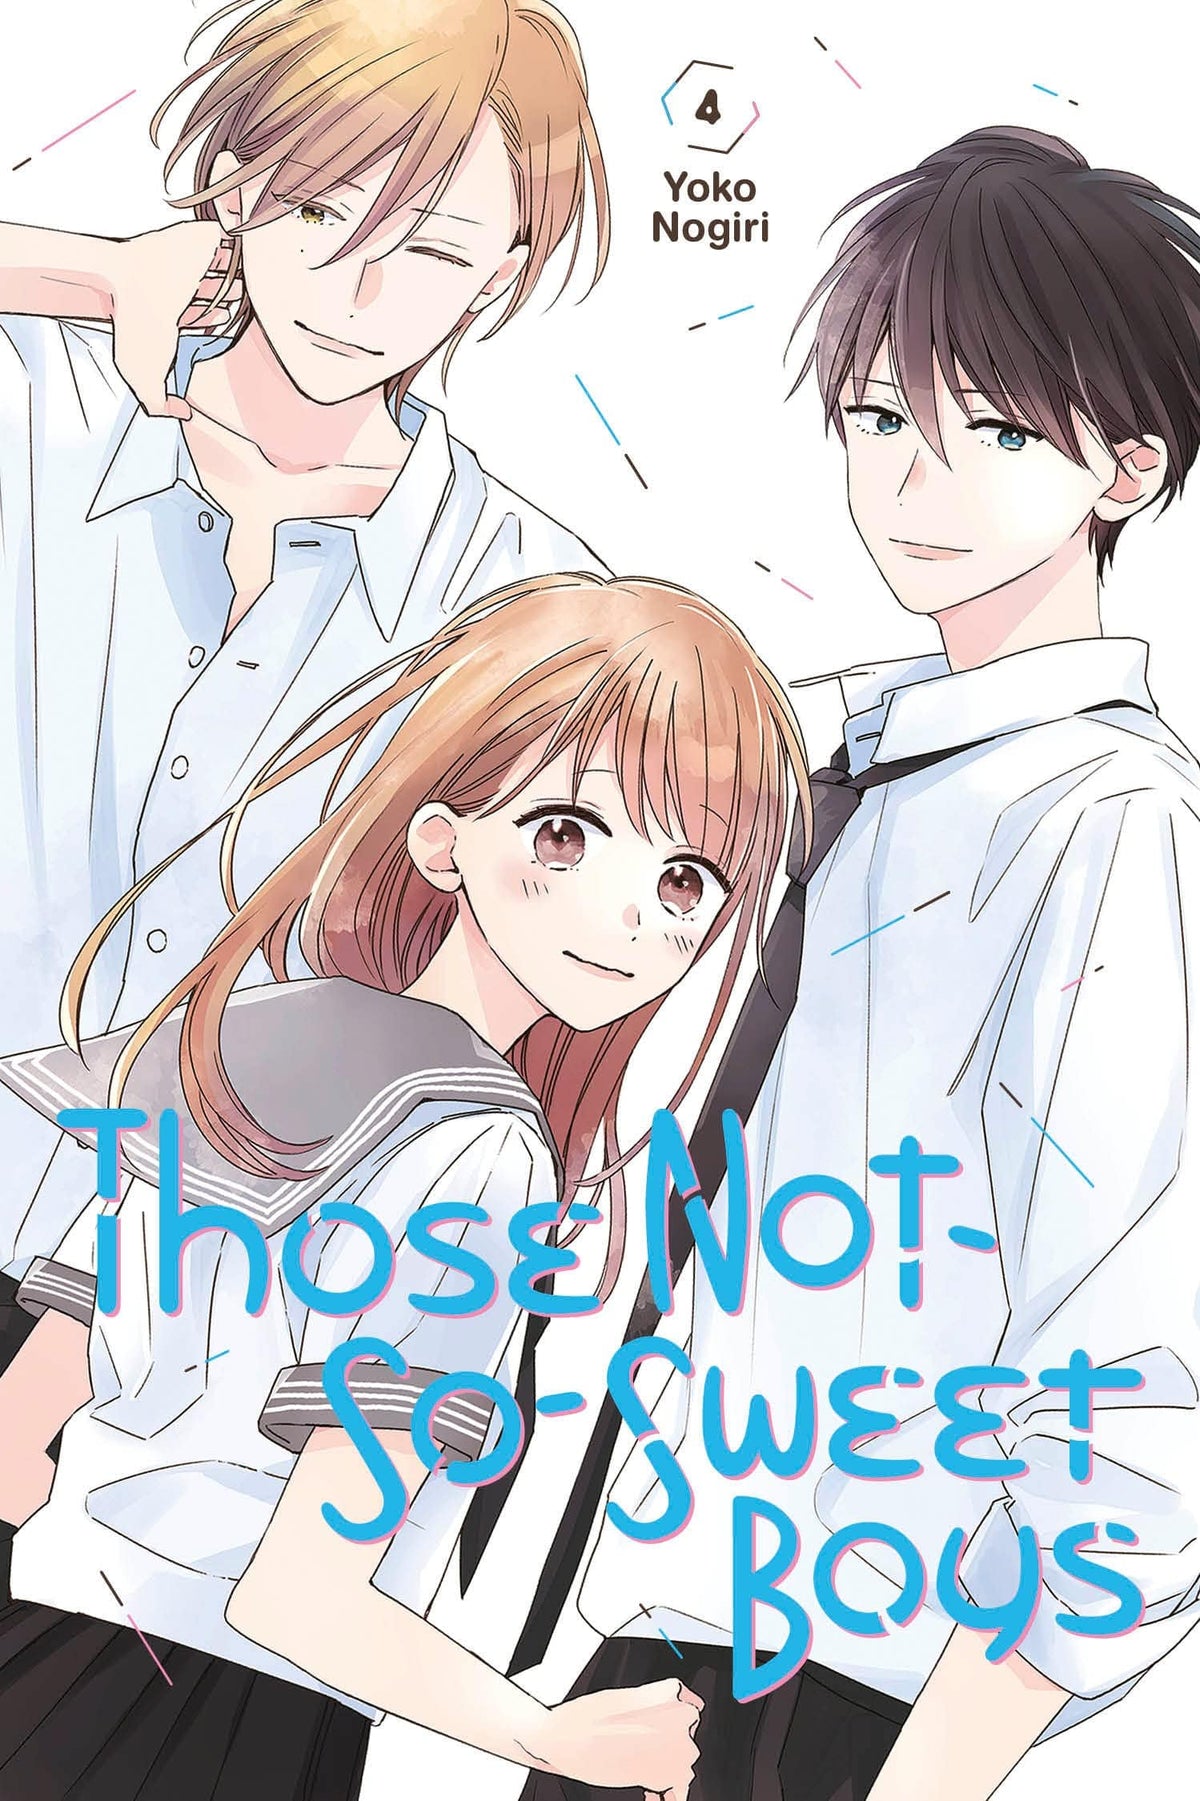 Those Not-So-Sweet Boys Vol. 4 - Third Eye